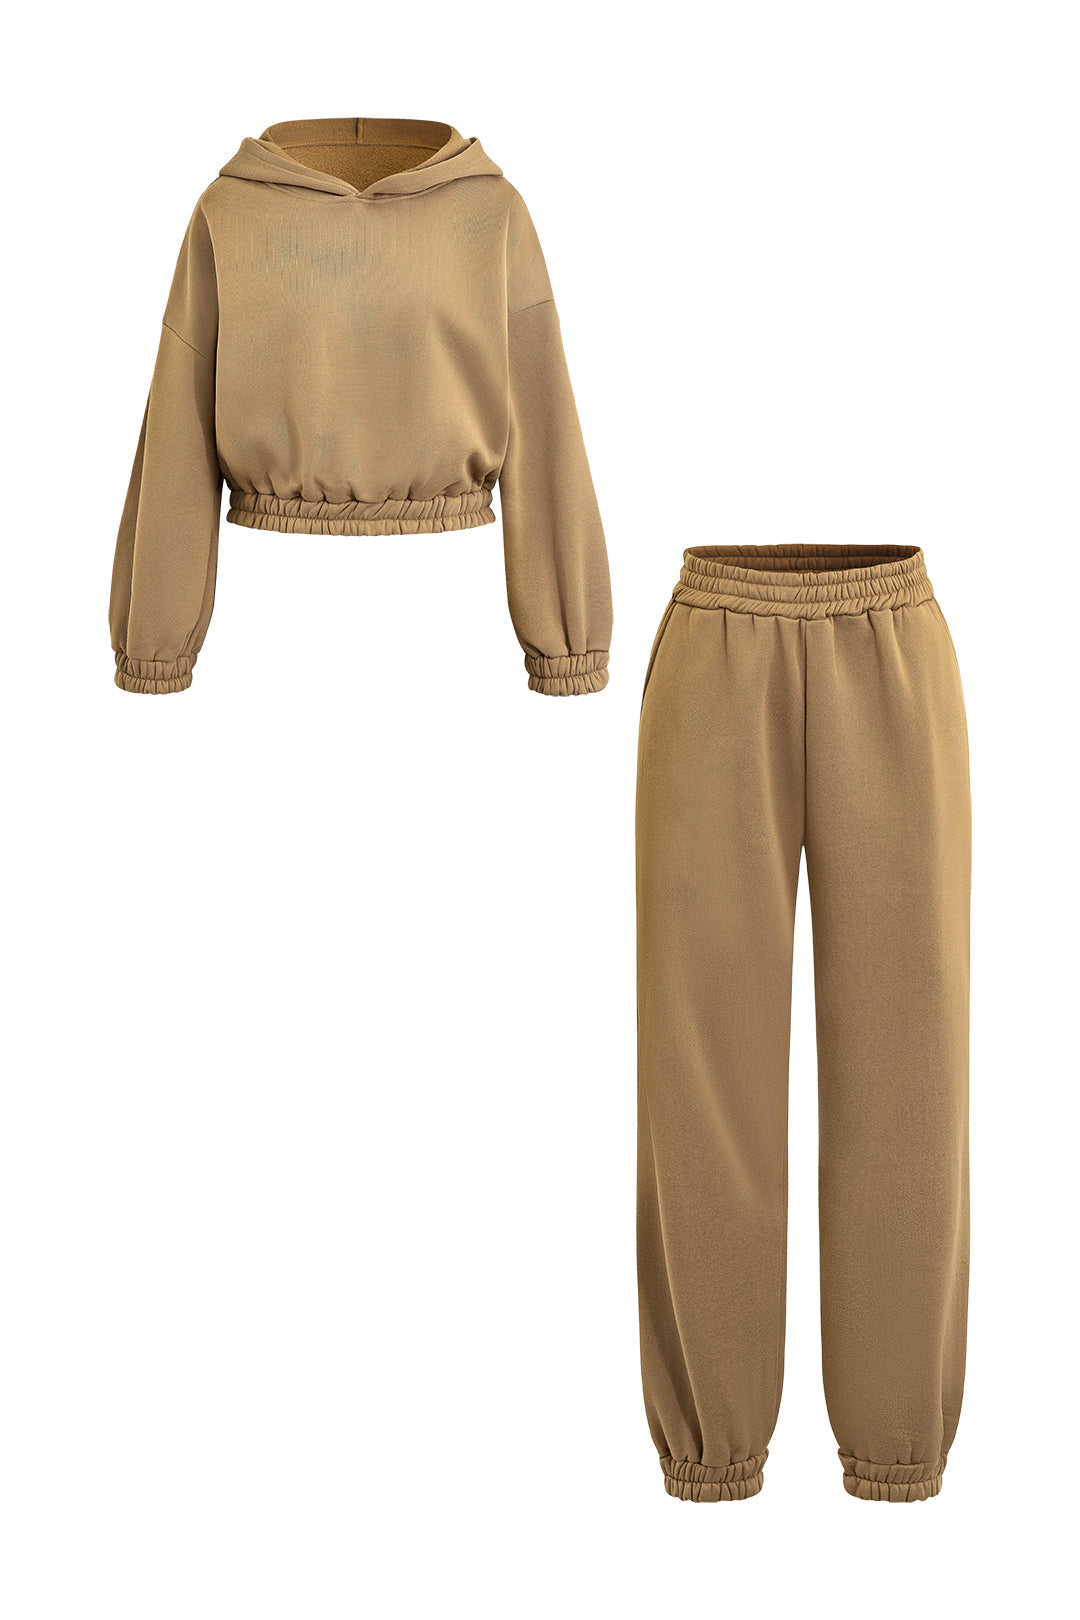 Basic Solid Hooded Long Sleeve Crop Sweatshirt And Cuffed Pants Set